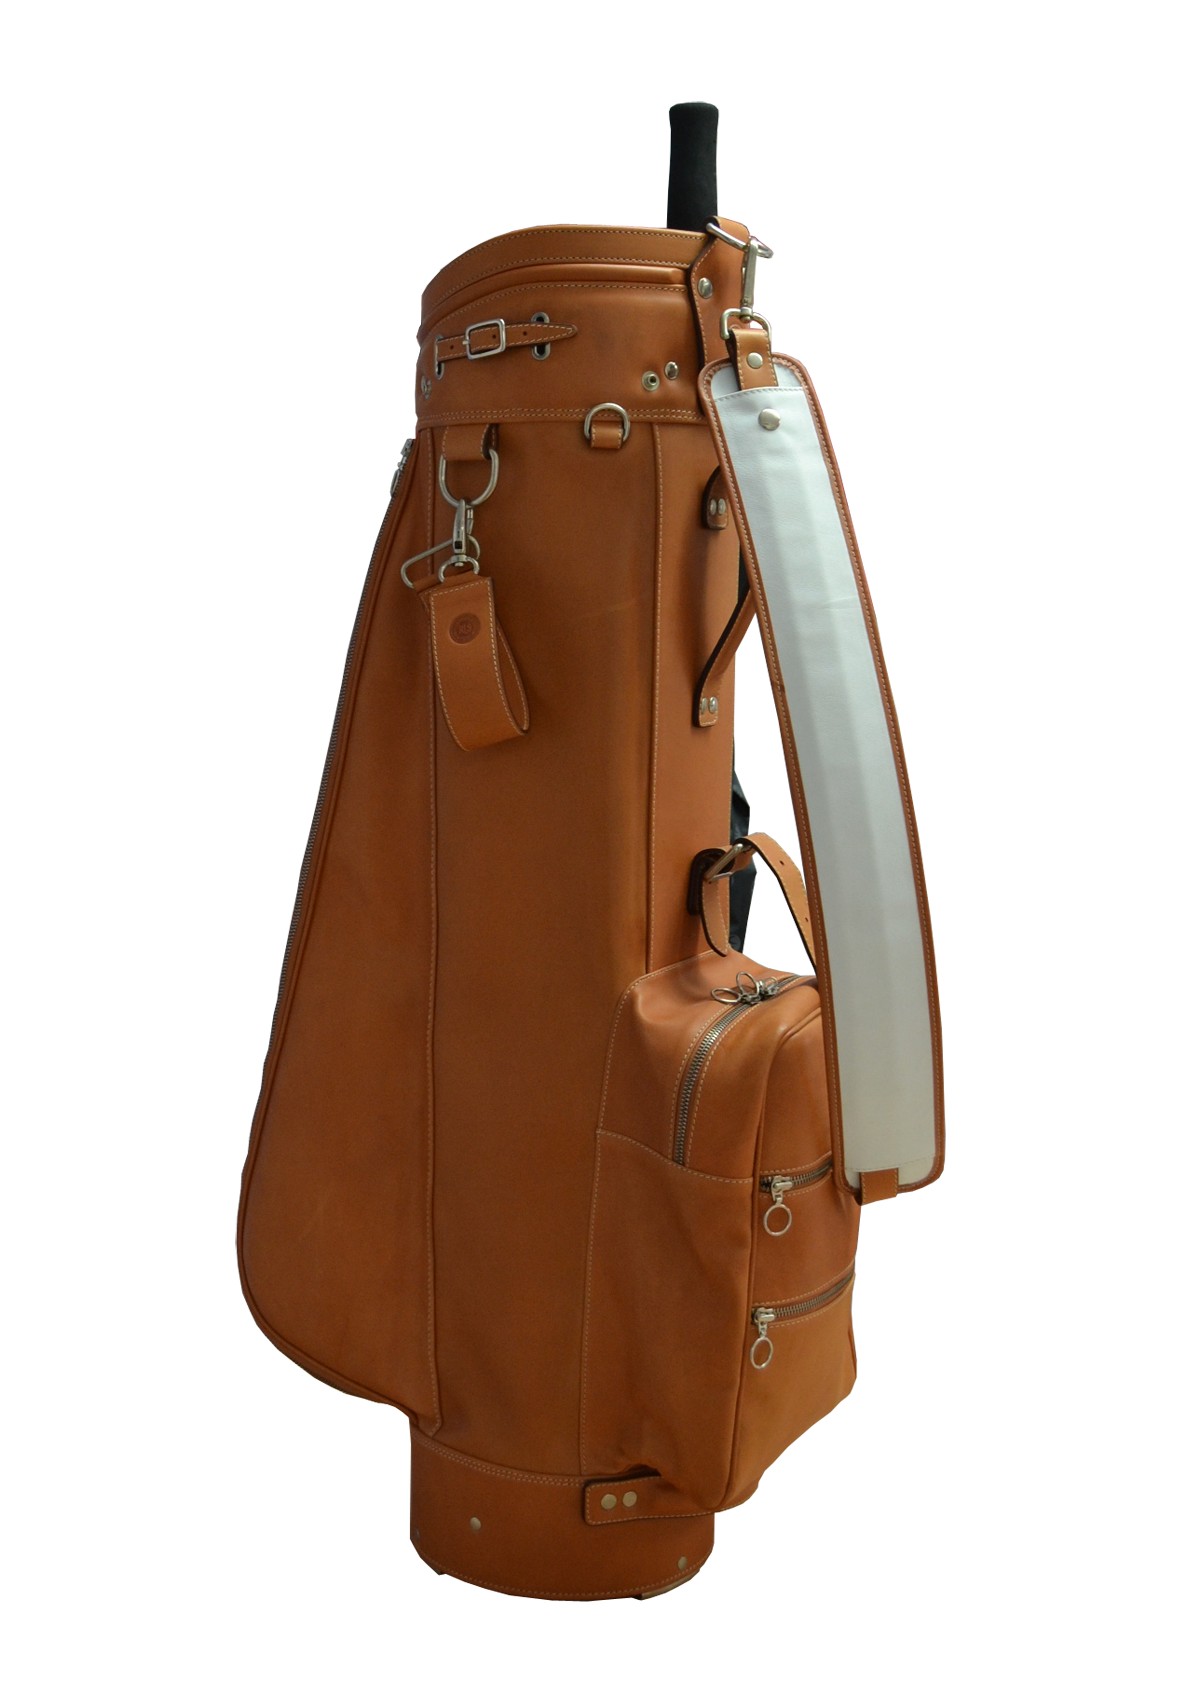 Tan Luxury Leather Golf Bag - Real Leather Studio